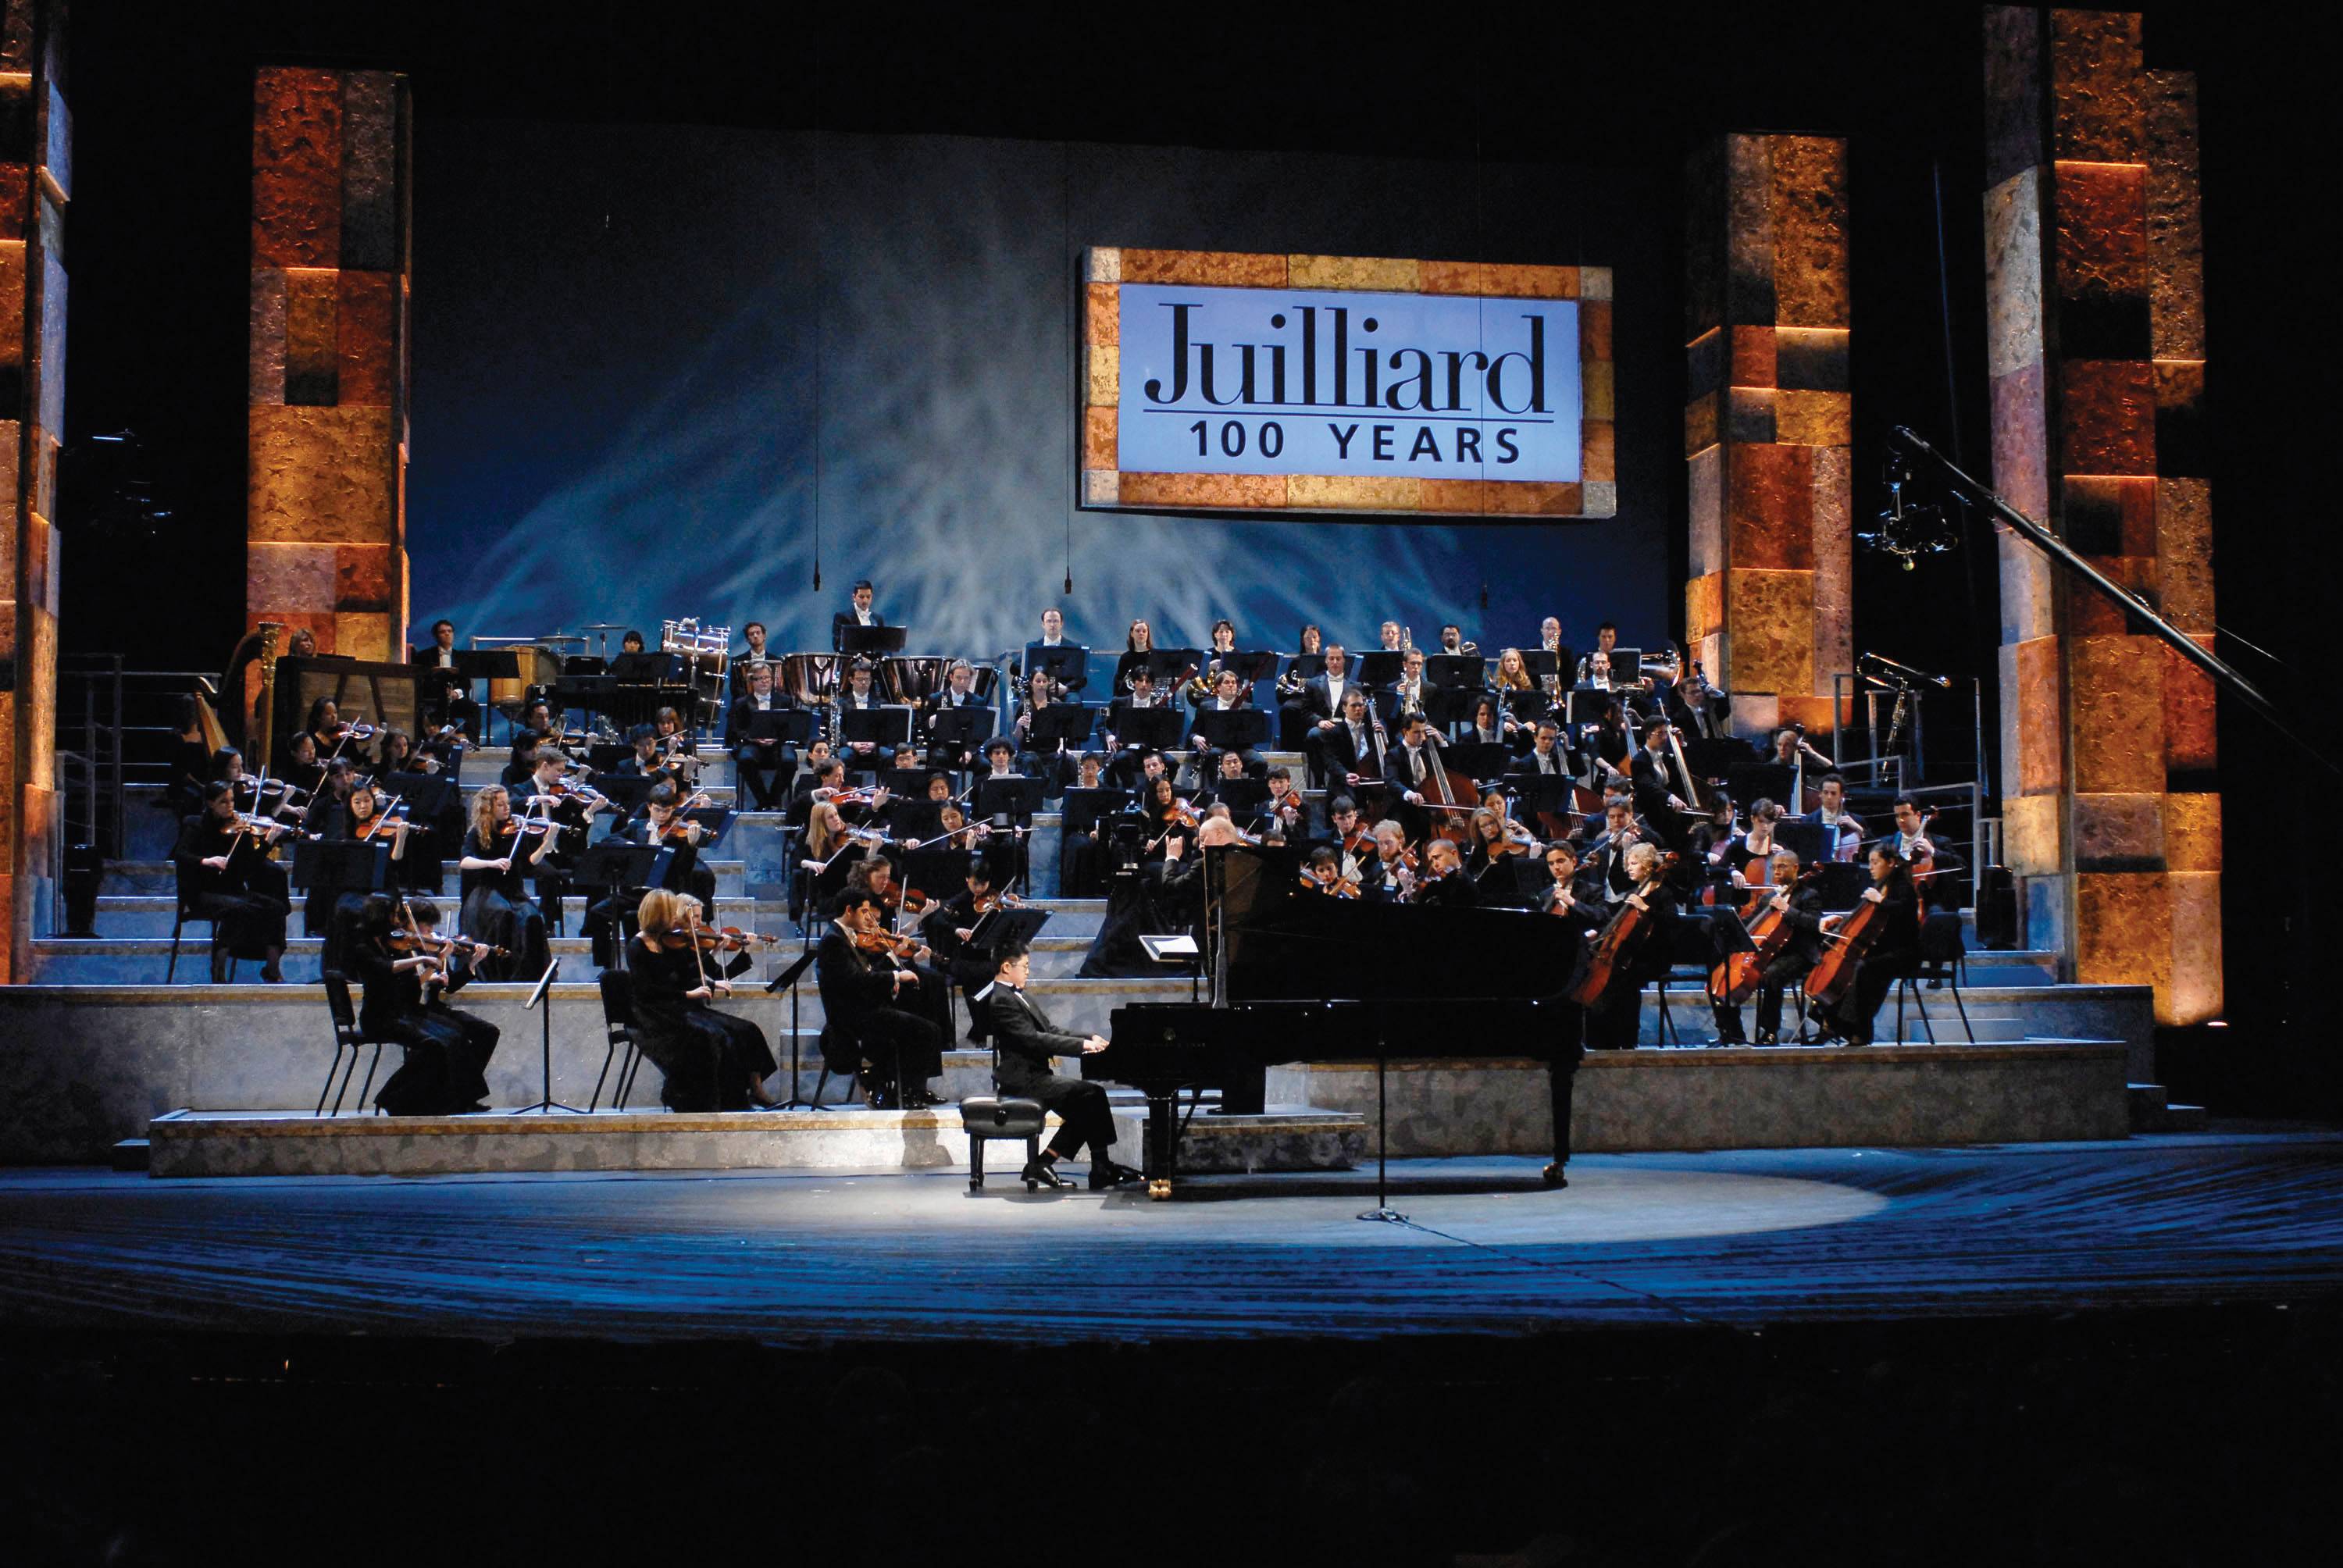 Centennial gala featuring John Williams conducting